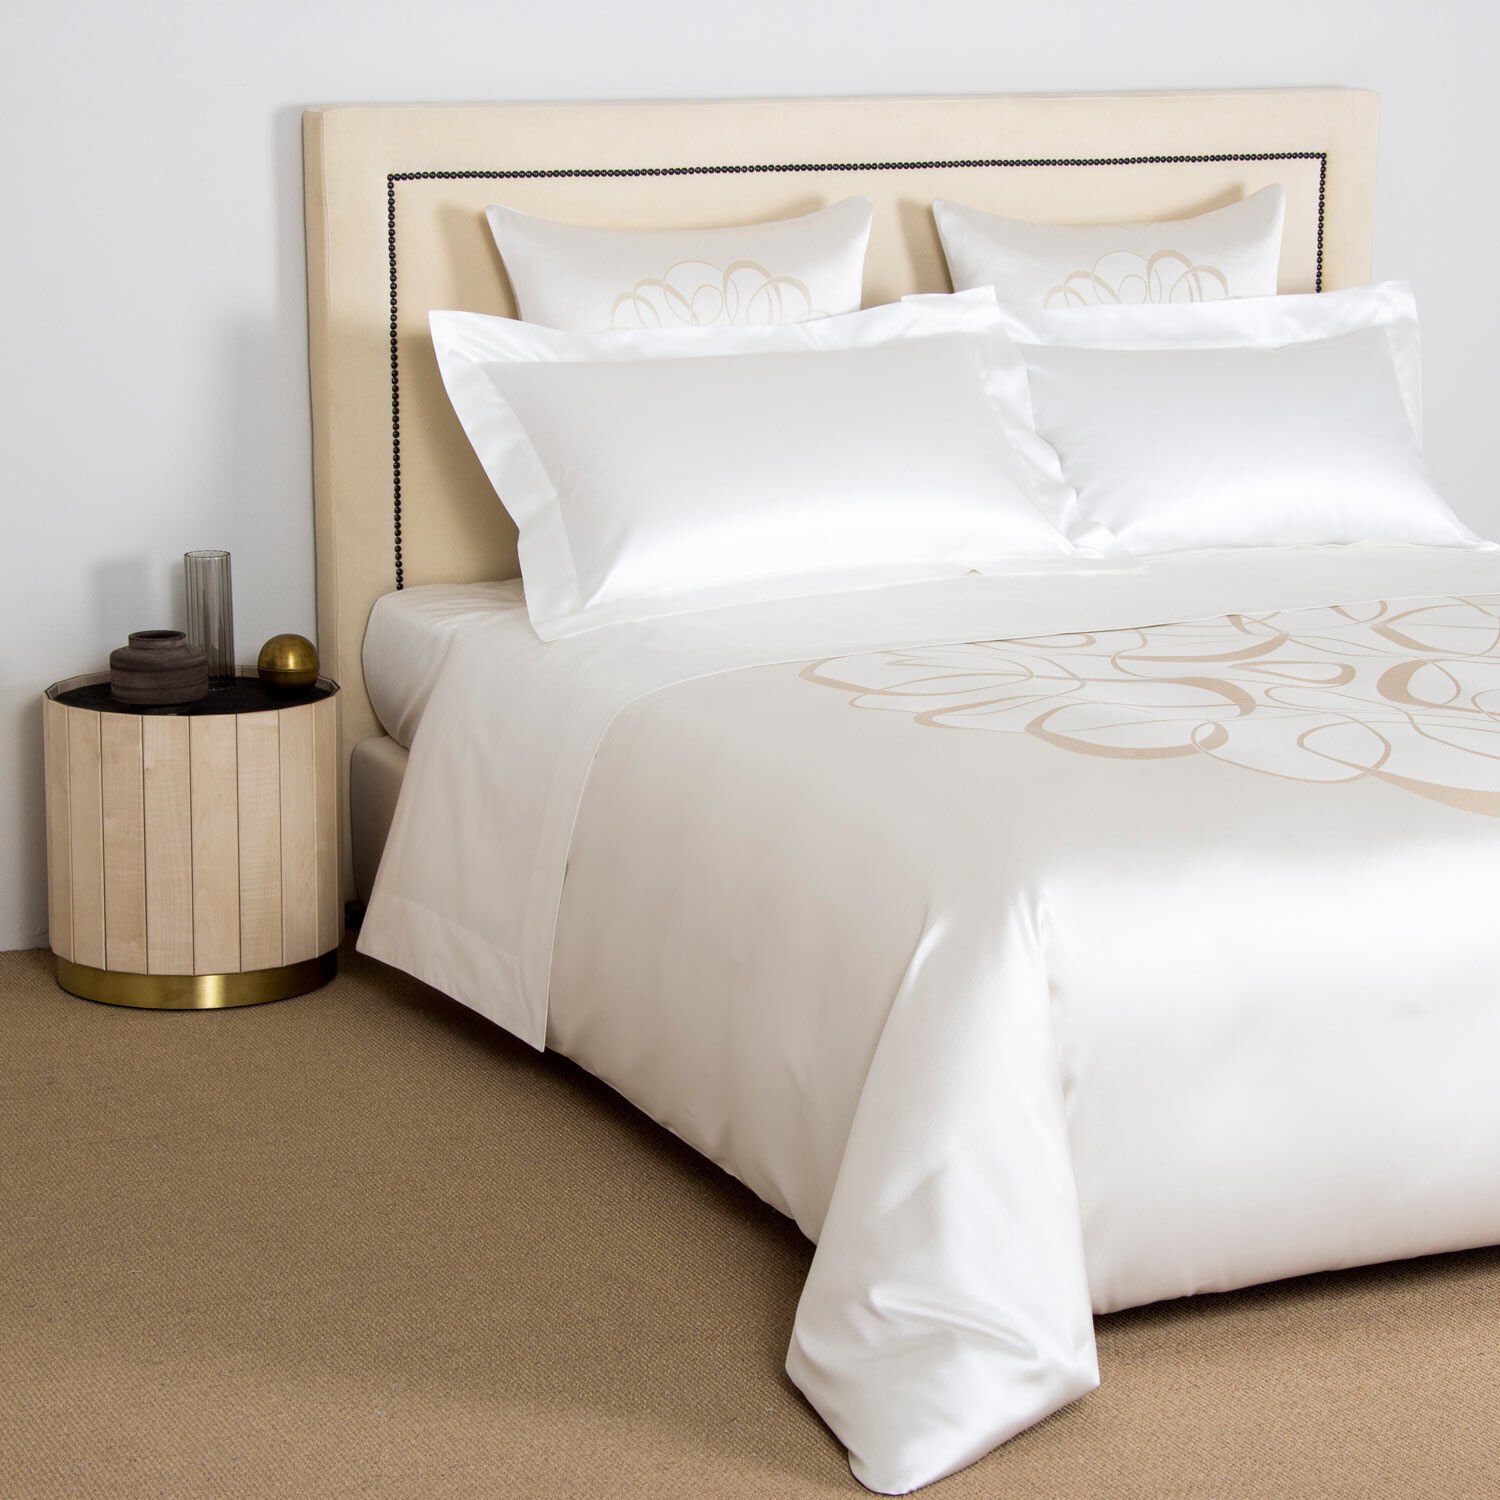 Luxury Sparkling Swirl Decorative Pillow